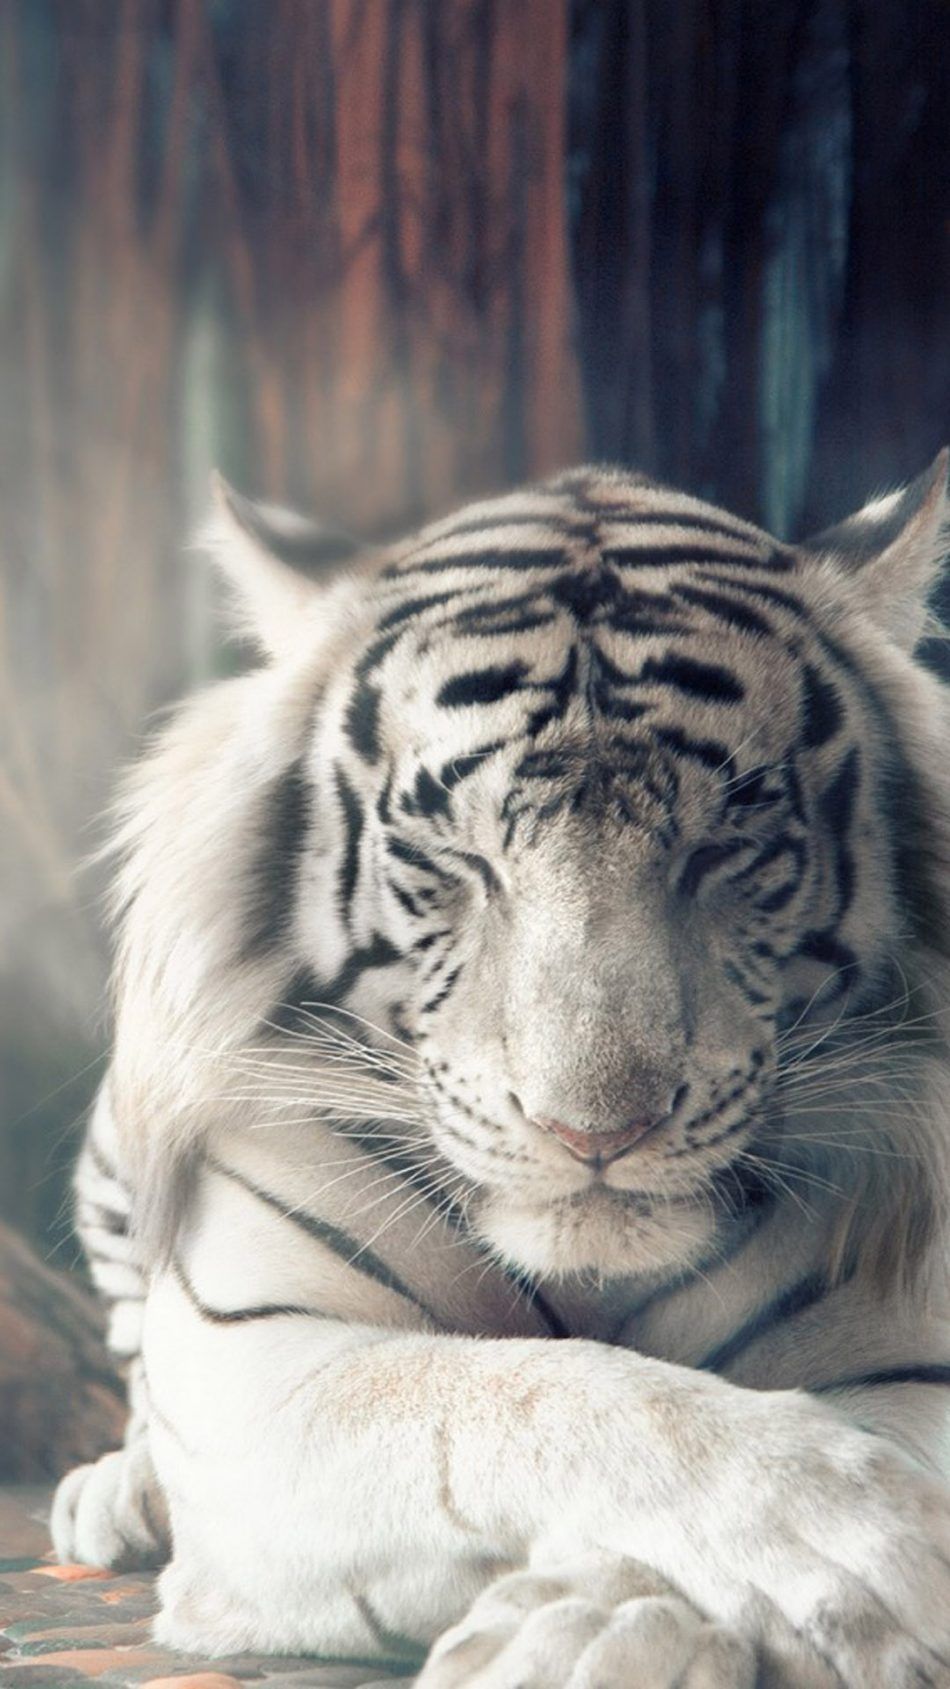 White Tiger Autumn Sunlight 4K Ultra HD Mobile Wallpaper. Tiger spirit animal, Tiger wallpaper, Animals beautiful